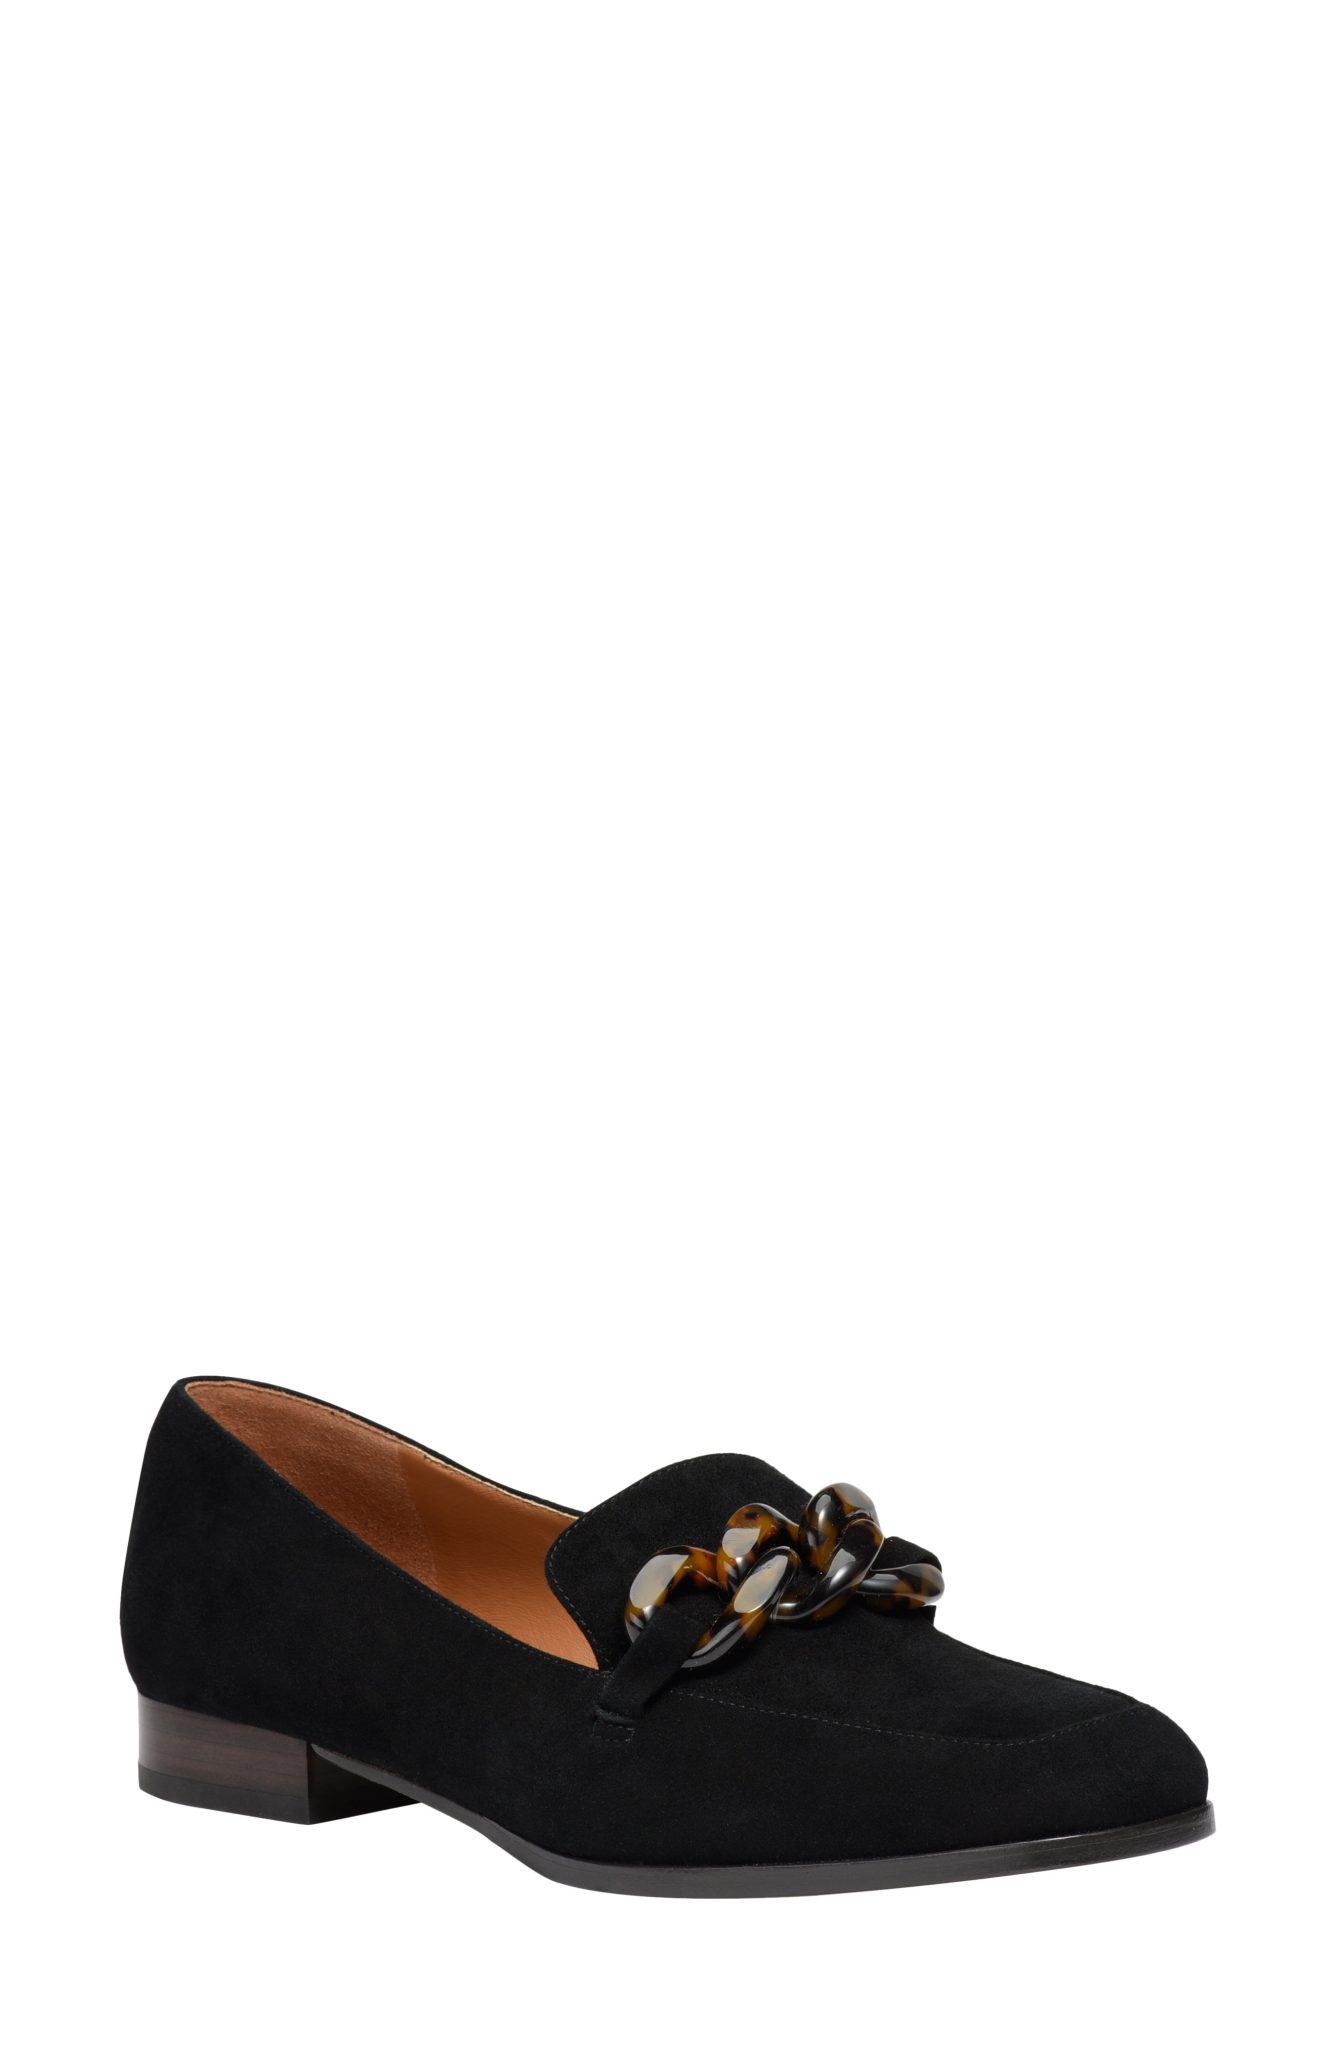 Women’s Kate Spade New York Rowan Loafer, Size 5.5 B - Black | Fashion ...